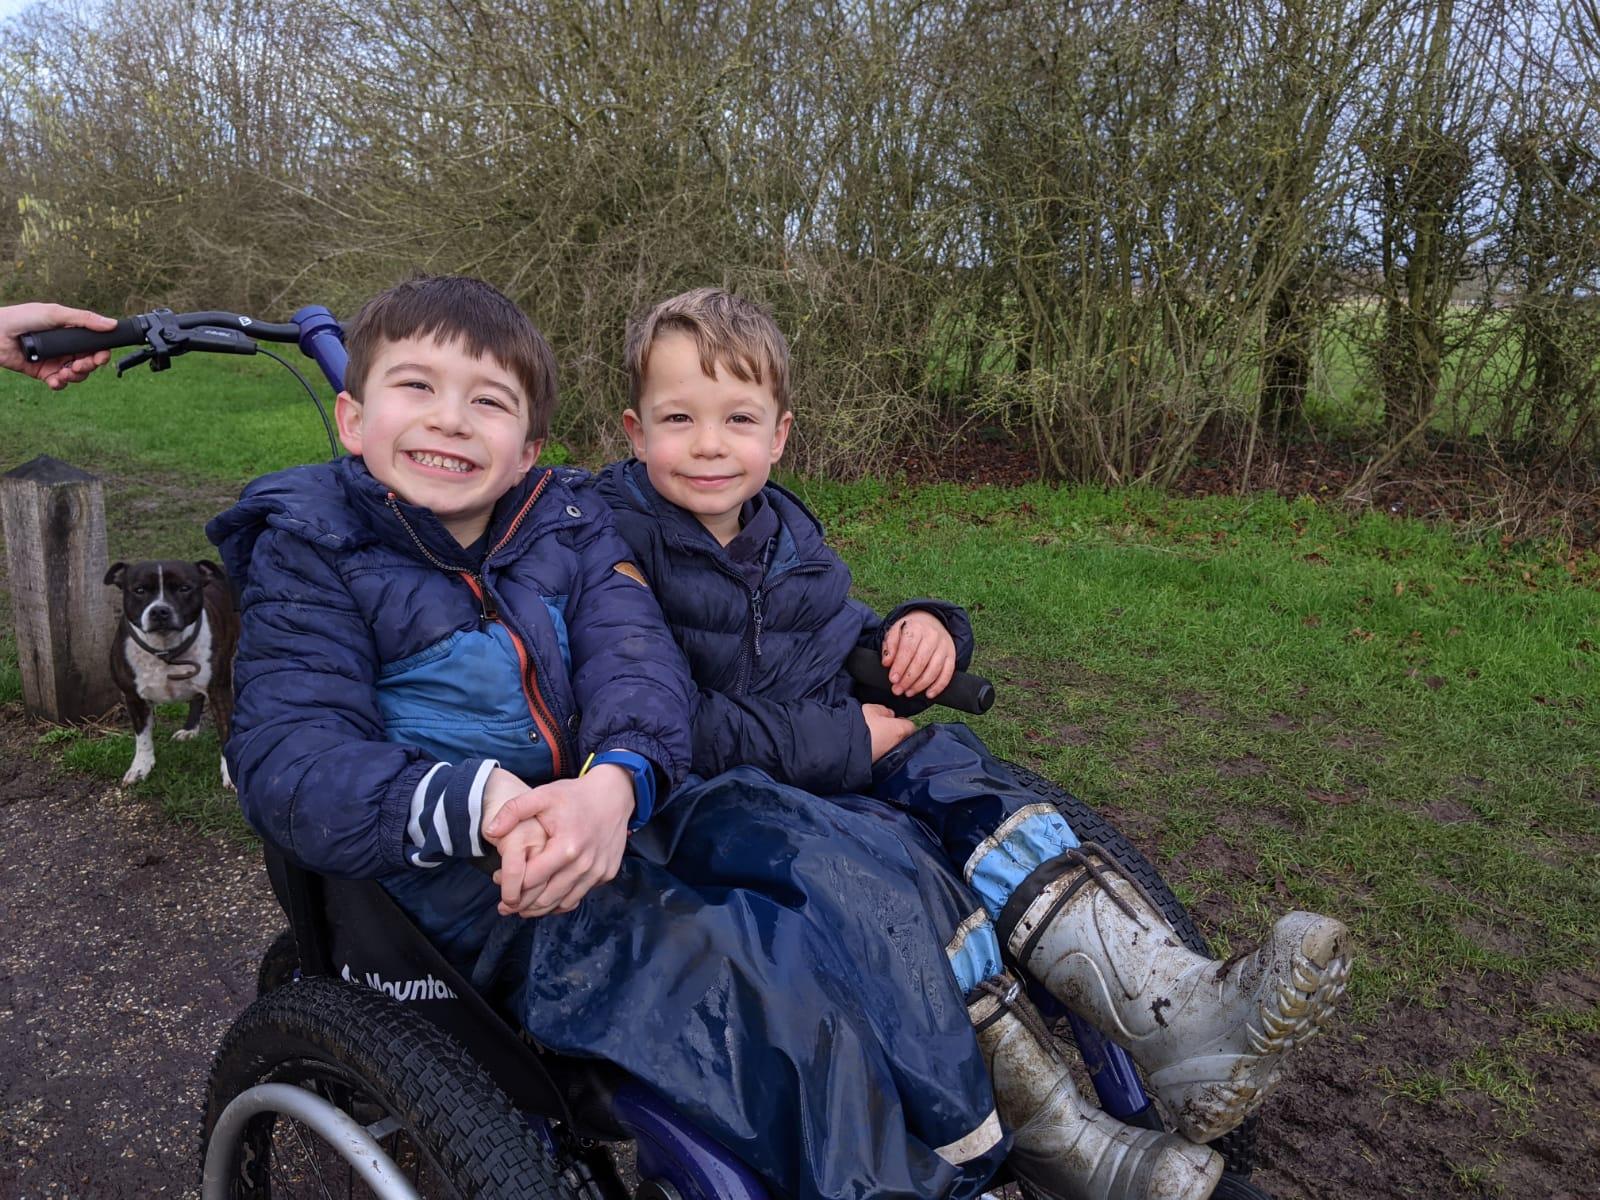 MT Push all terrain wheelchair - perfect for outdoor family fun 